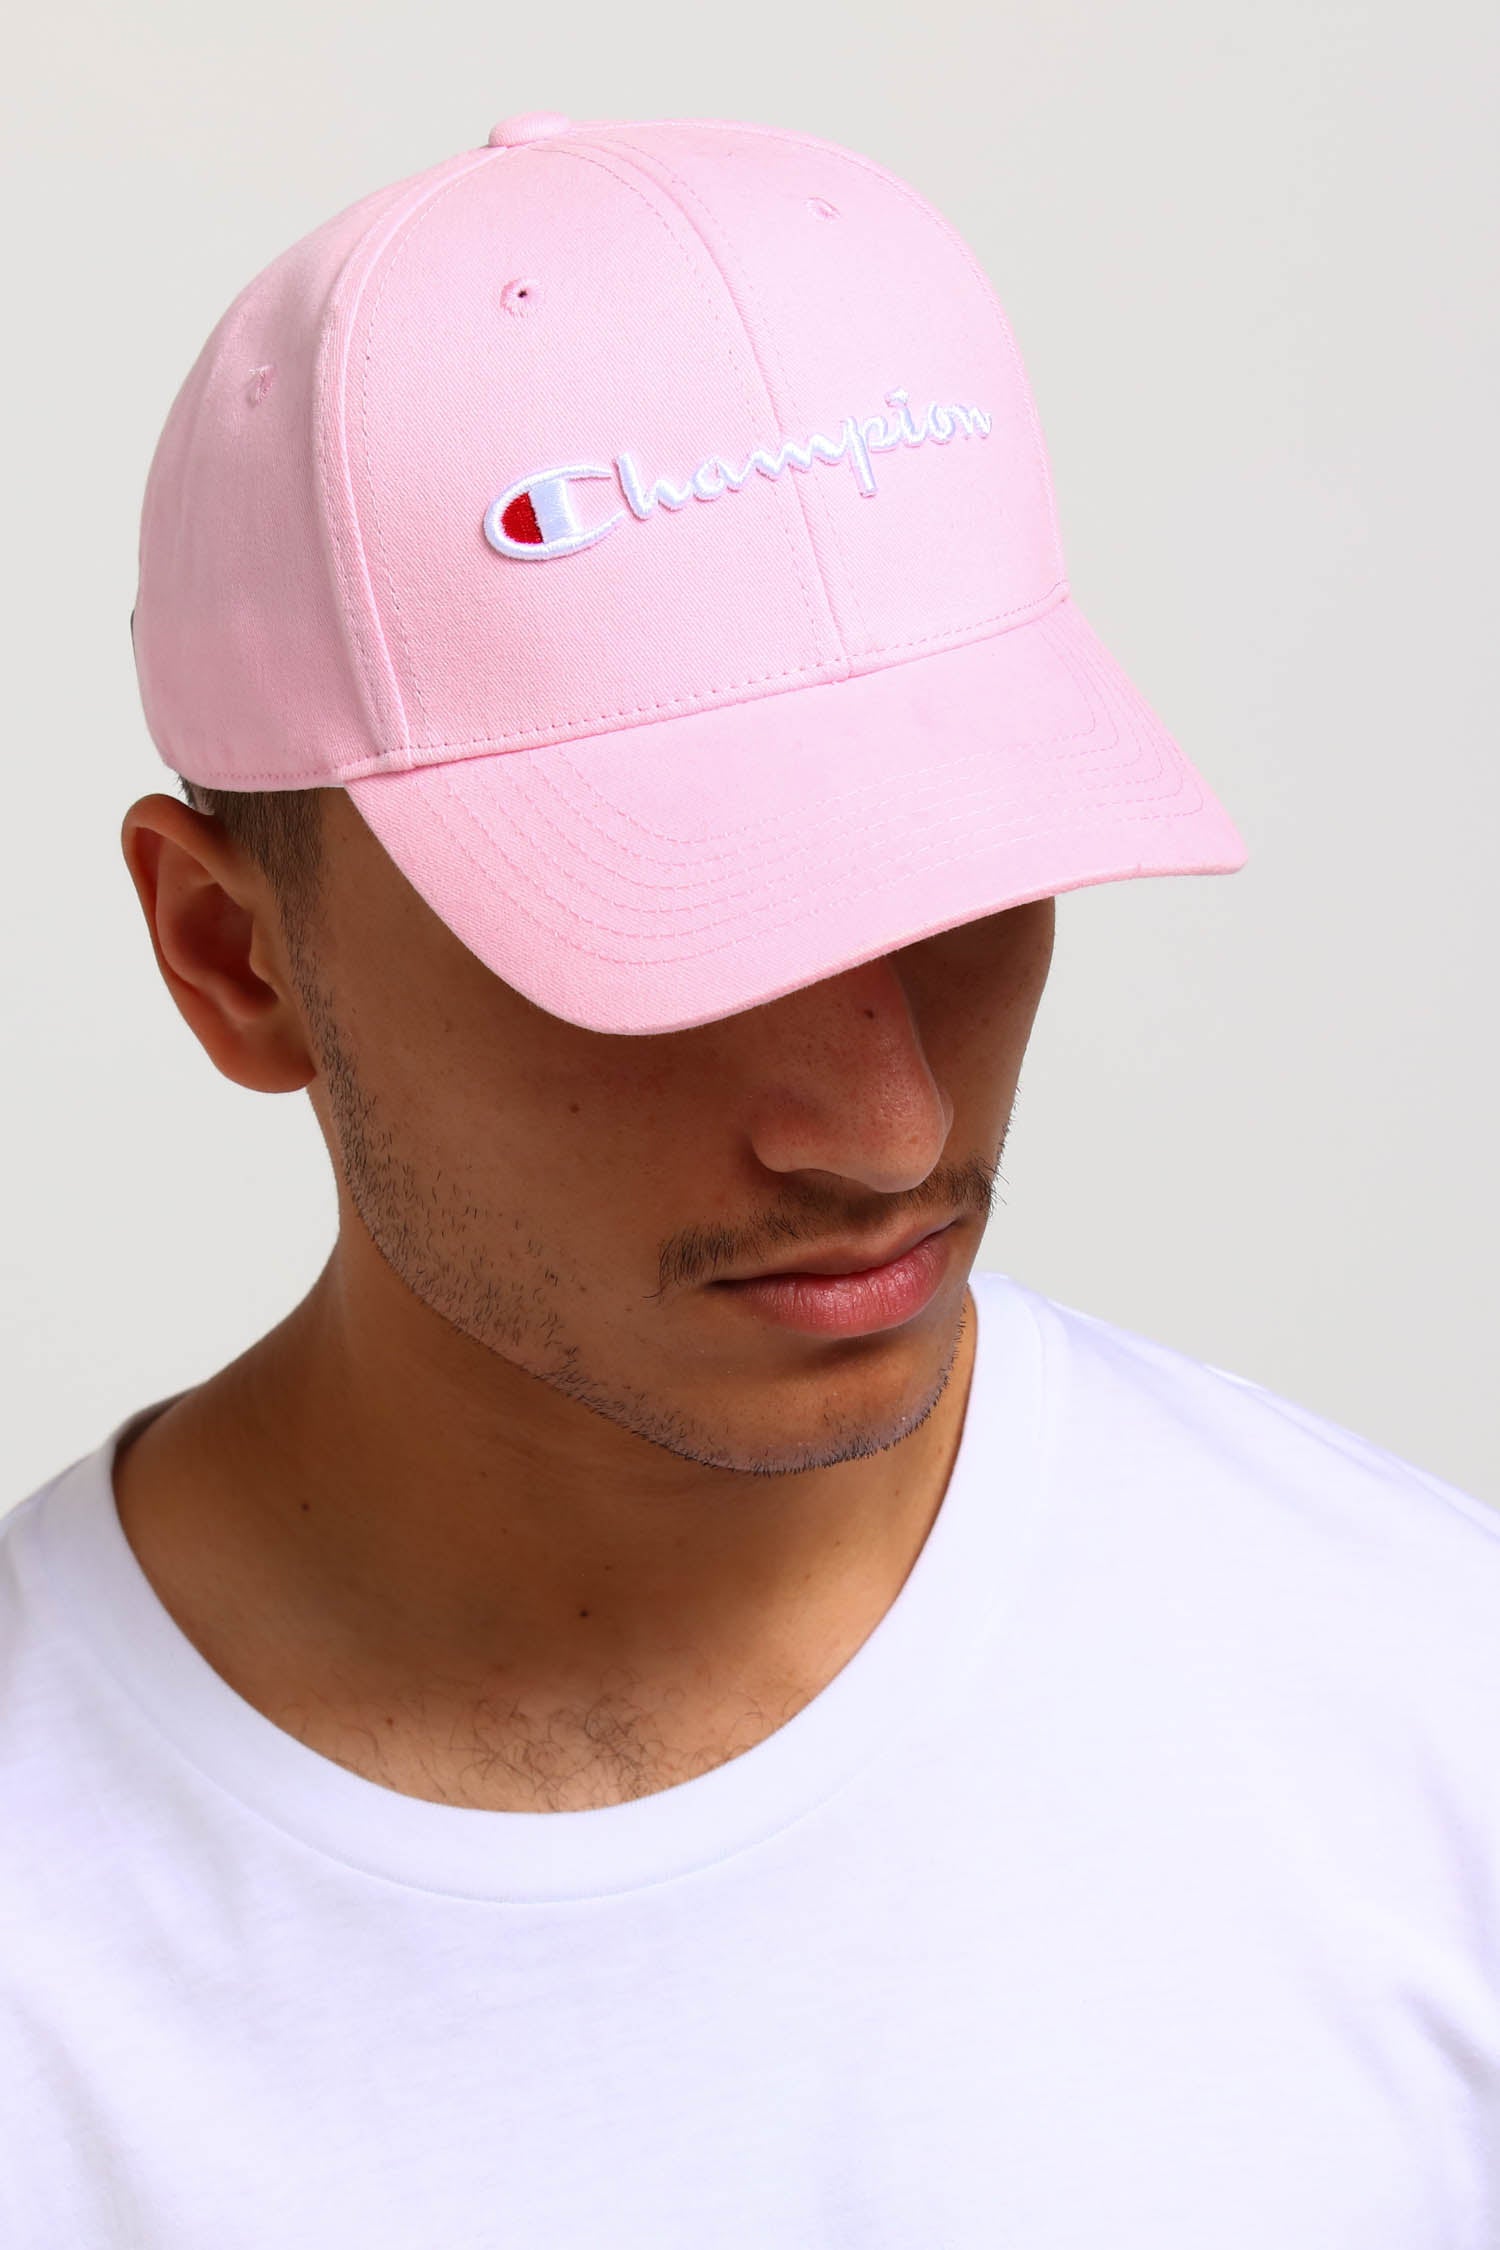 champion hat pink